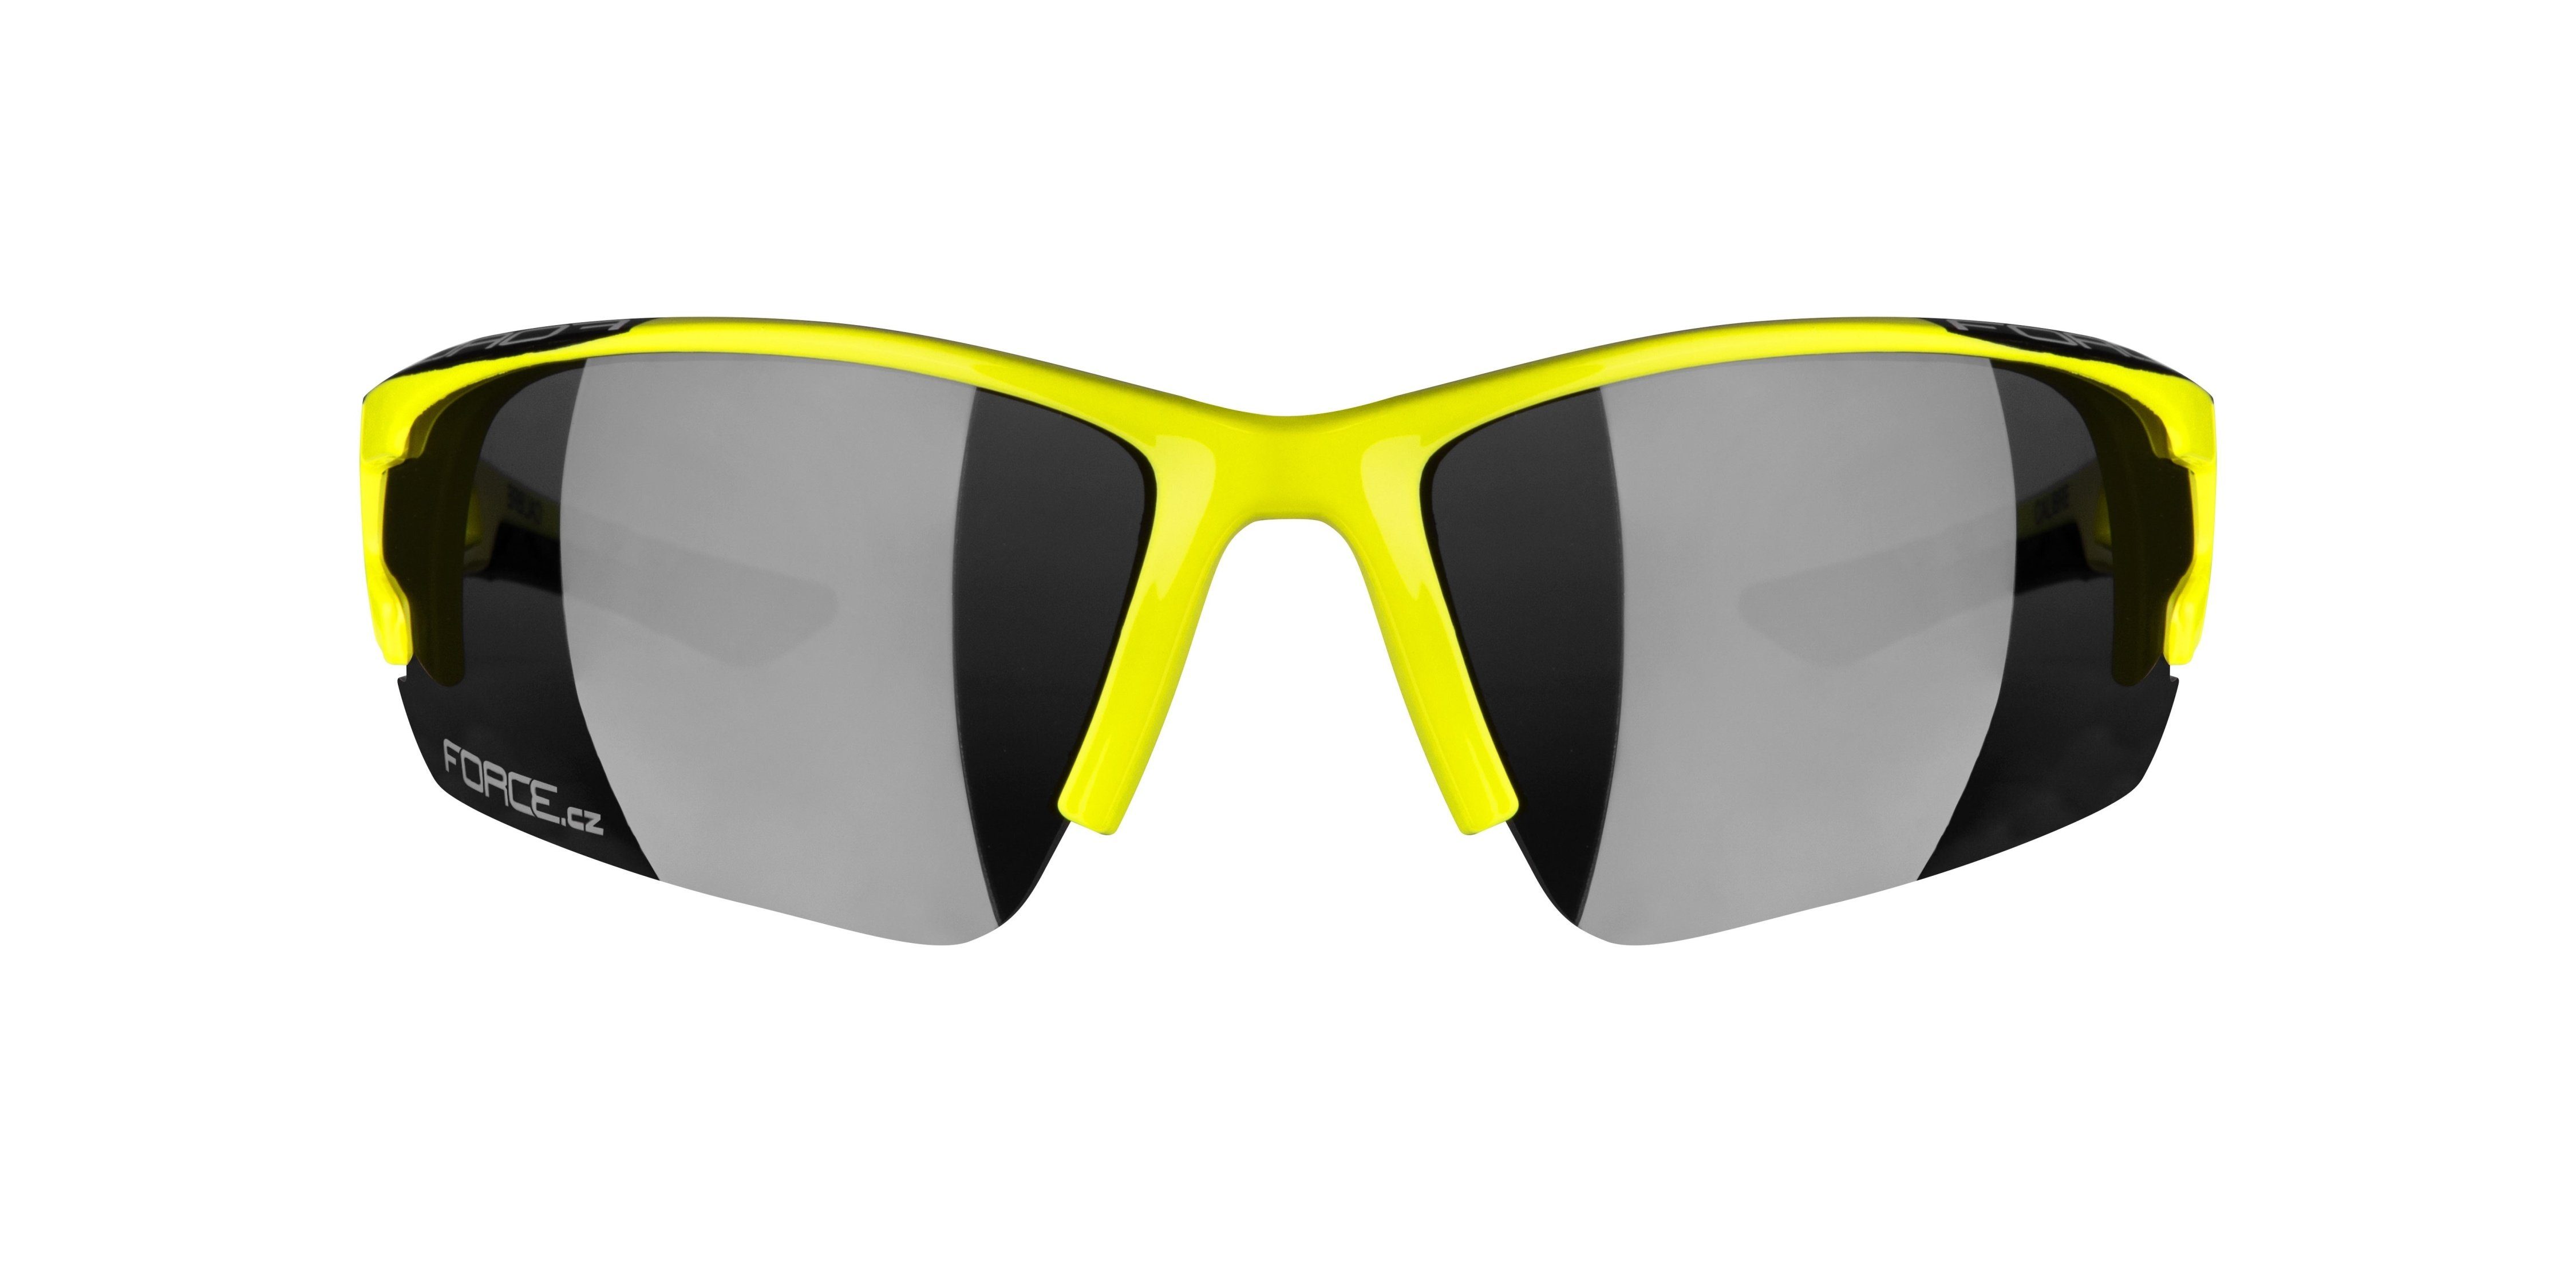 CALIBRE FORCE FORCE gelb-schwarz Fahrradbrille Sonnenbrille